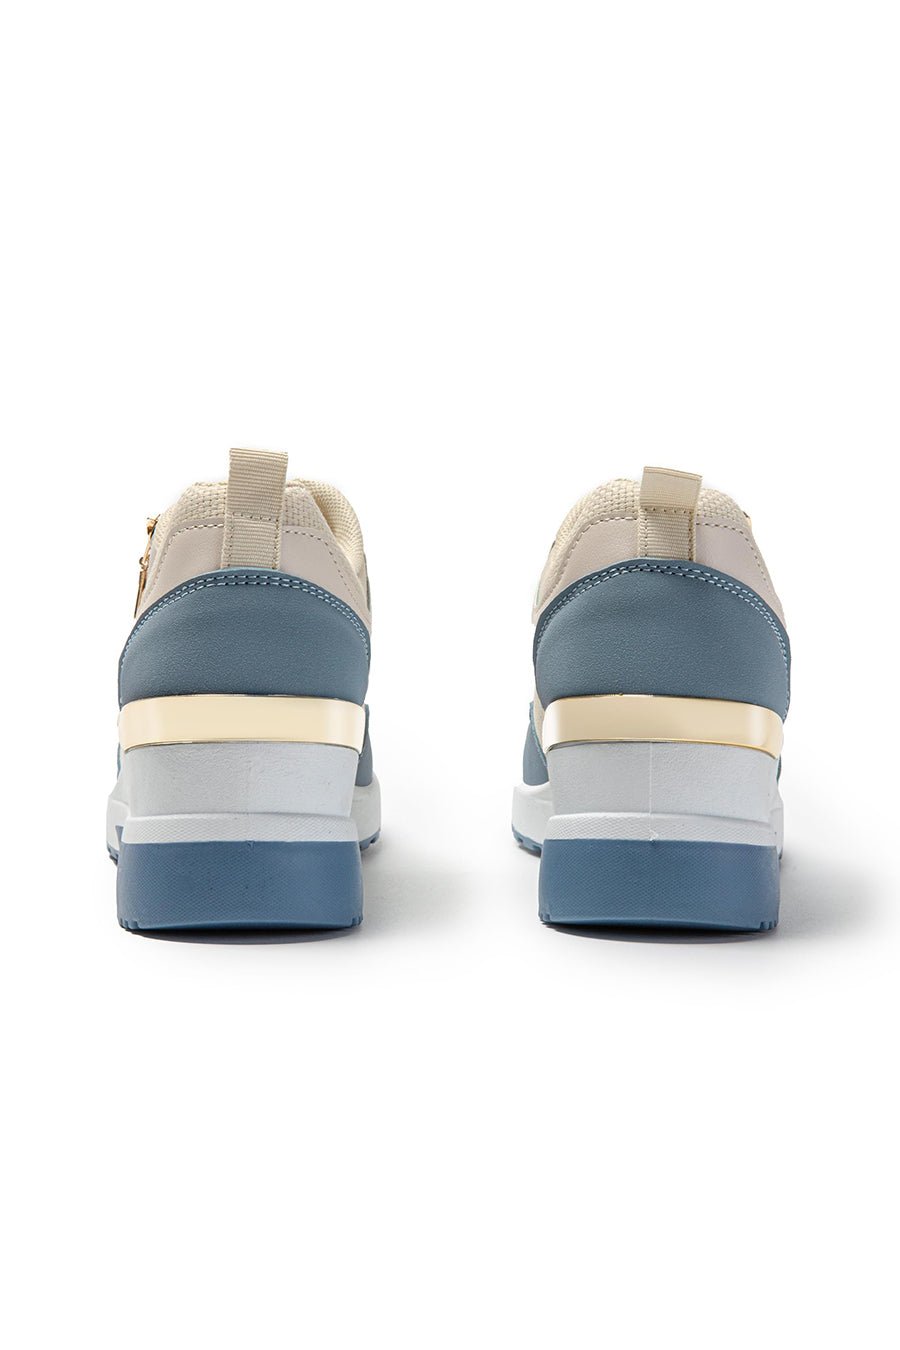 JOMIX Sneakers Donna Casual Scarpe Eleganti Sportive Tacco Zeppa Comode da Camminata SD9405